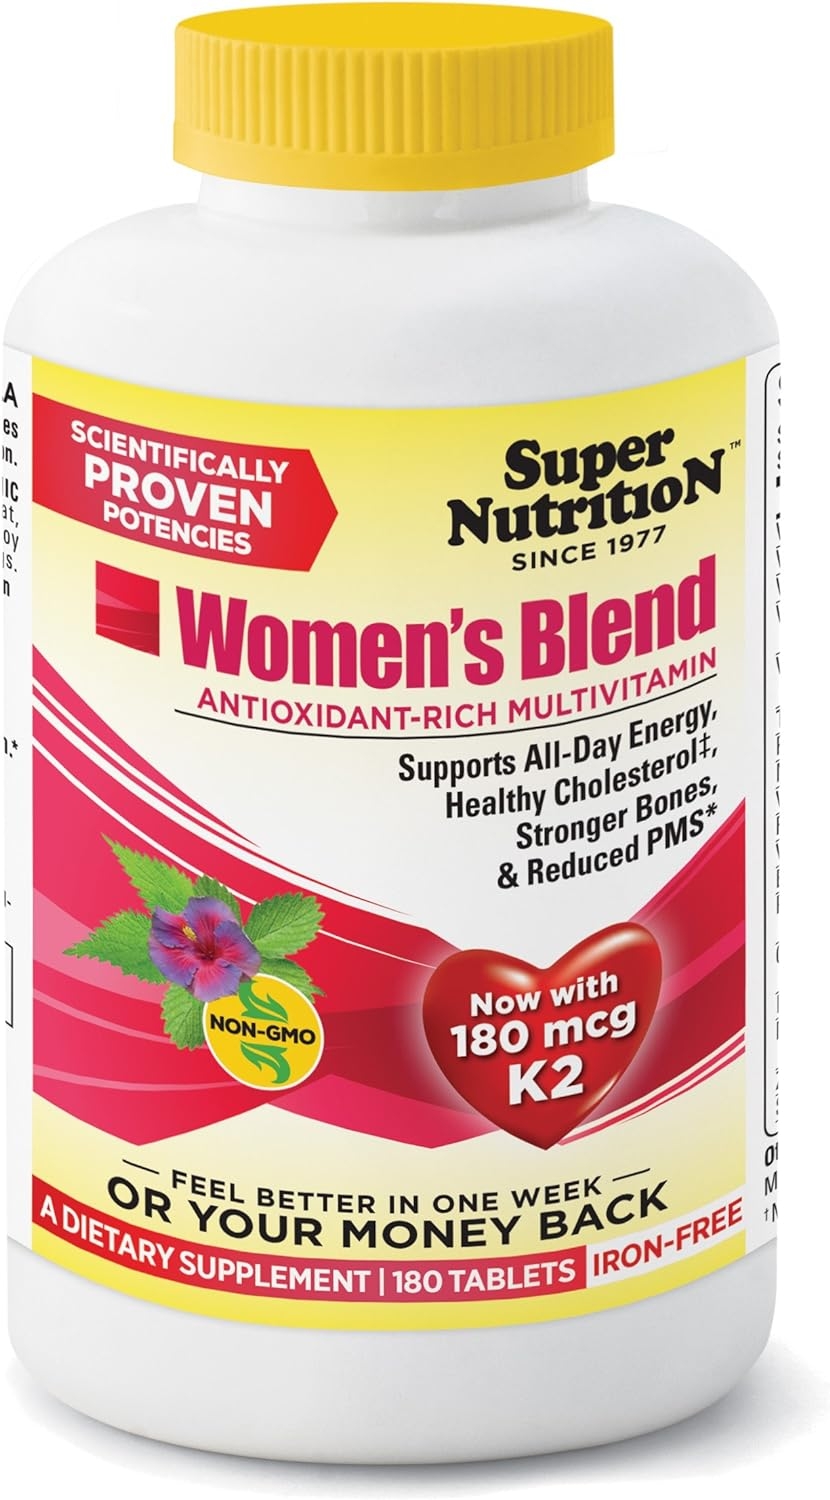 SuperNutrition Women's Blend Multi-Vitamin, Iron-Free, 180 Tablets